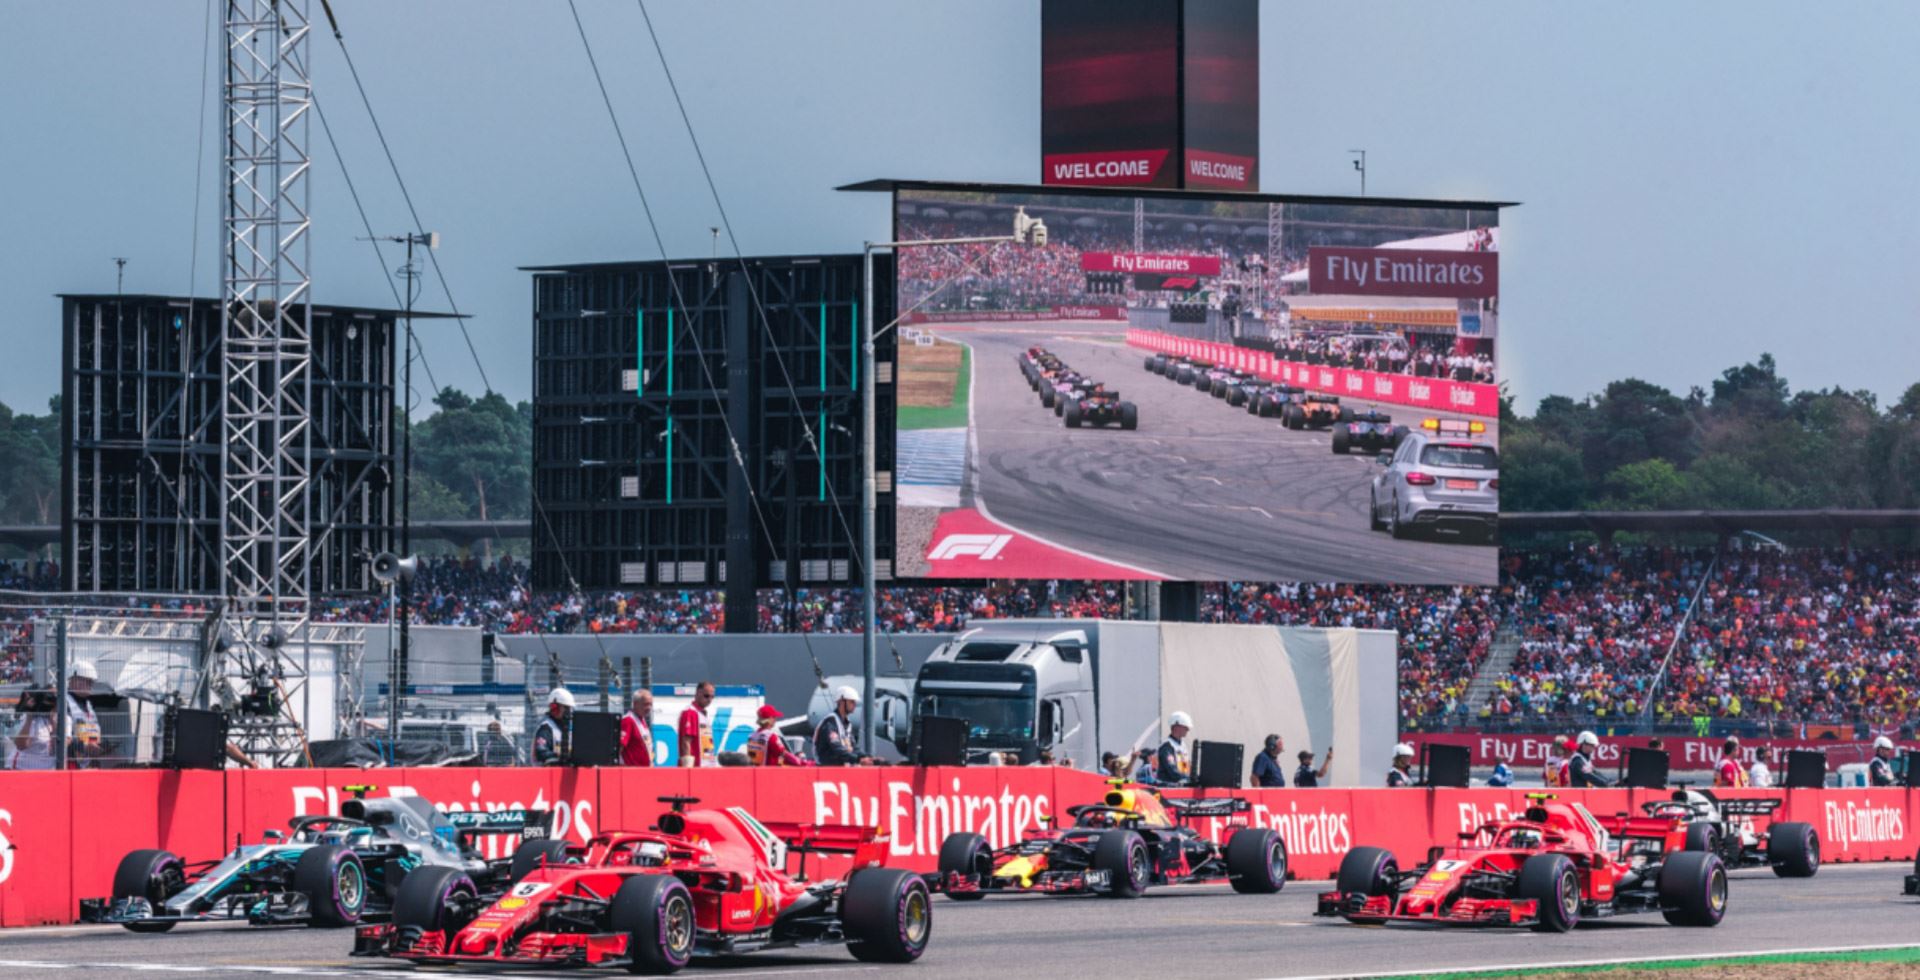 The 2018 Formula One World Championship